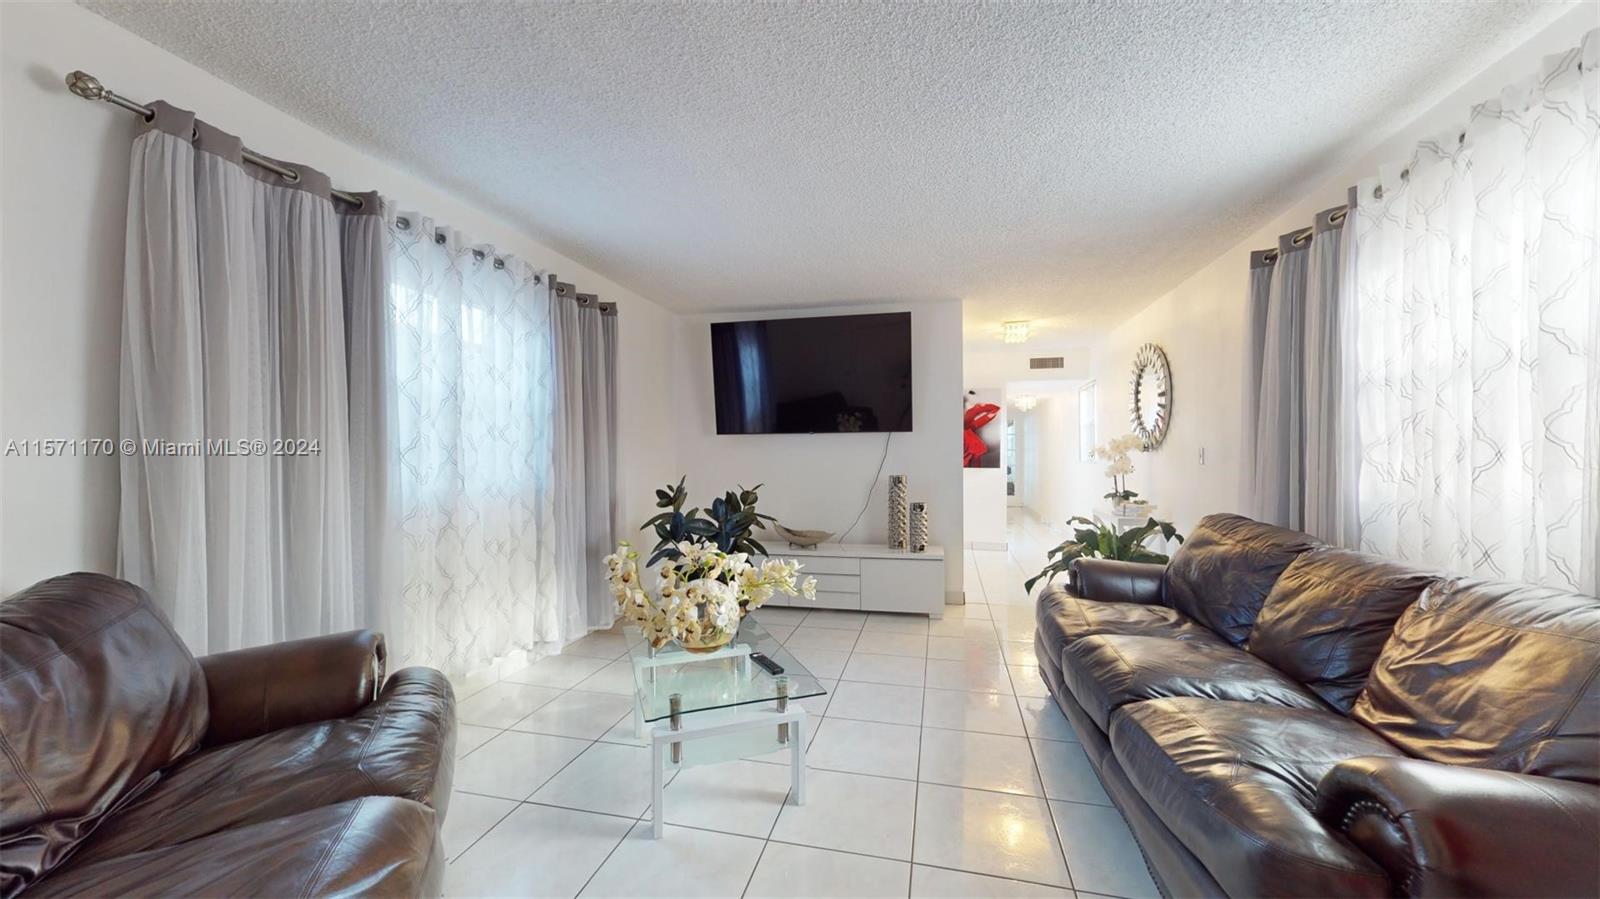 380 W 45th St, Hialeah, Miami-Dade County, Florida - 3 Bedrooms  
3 Bathrooms - 